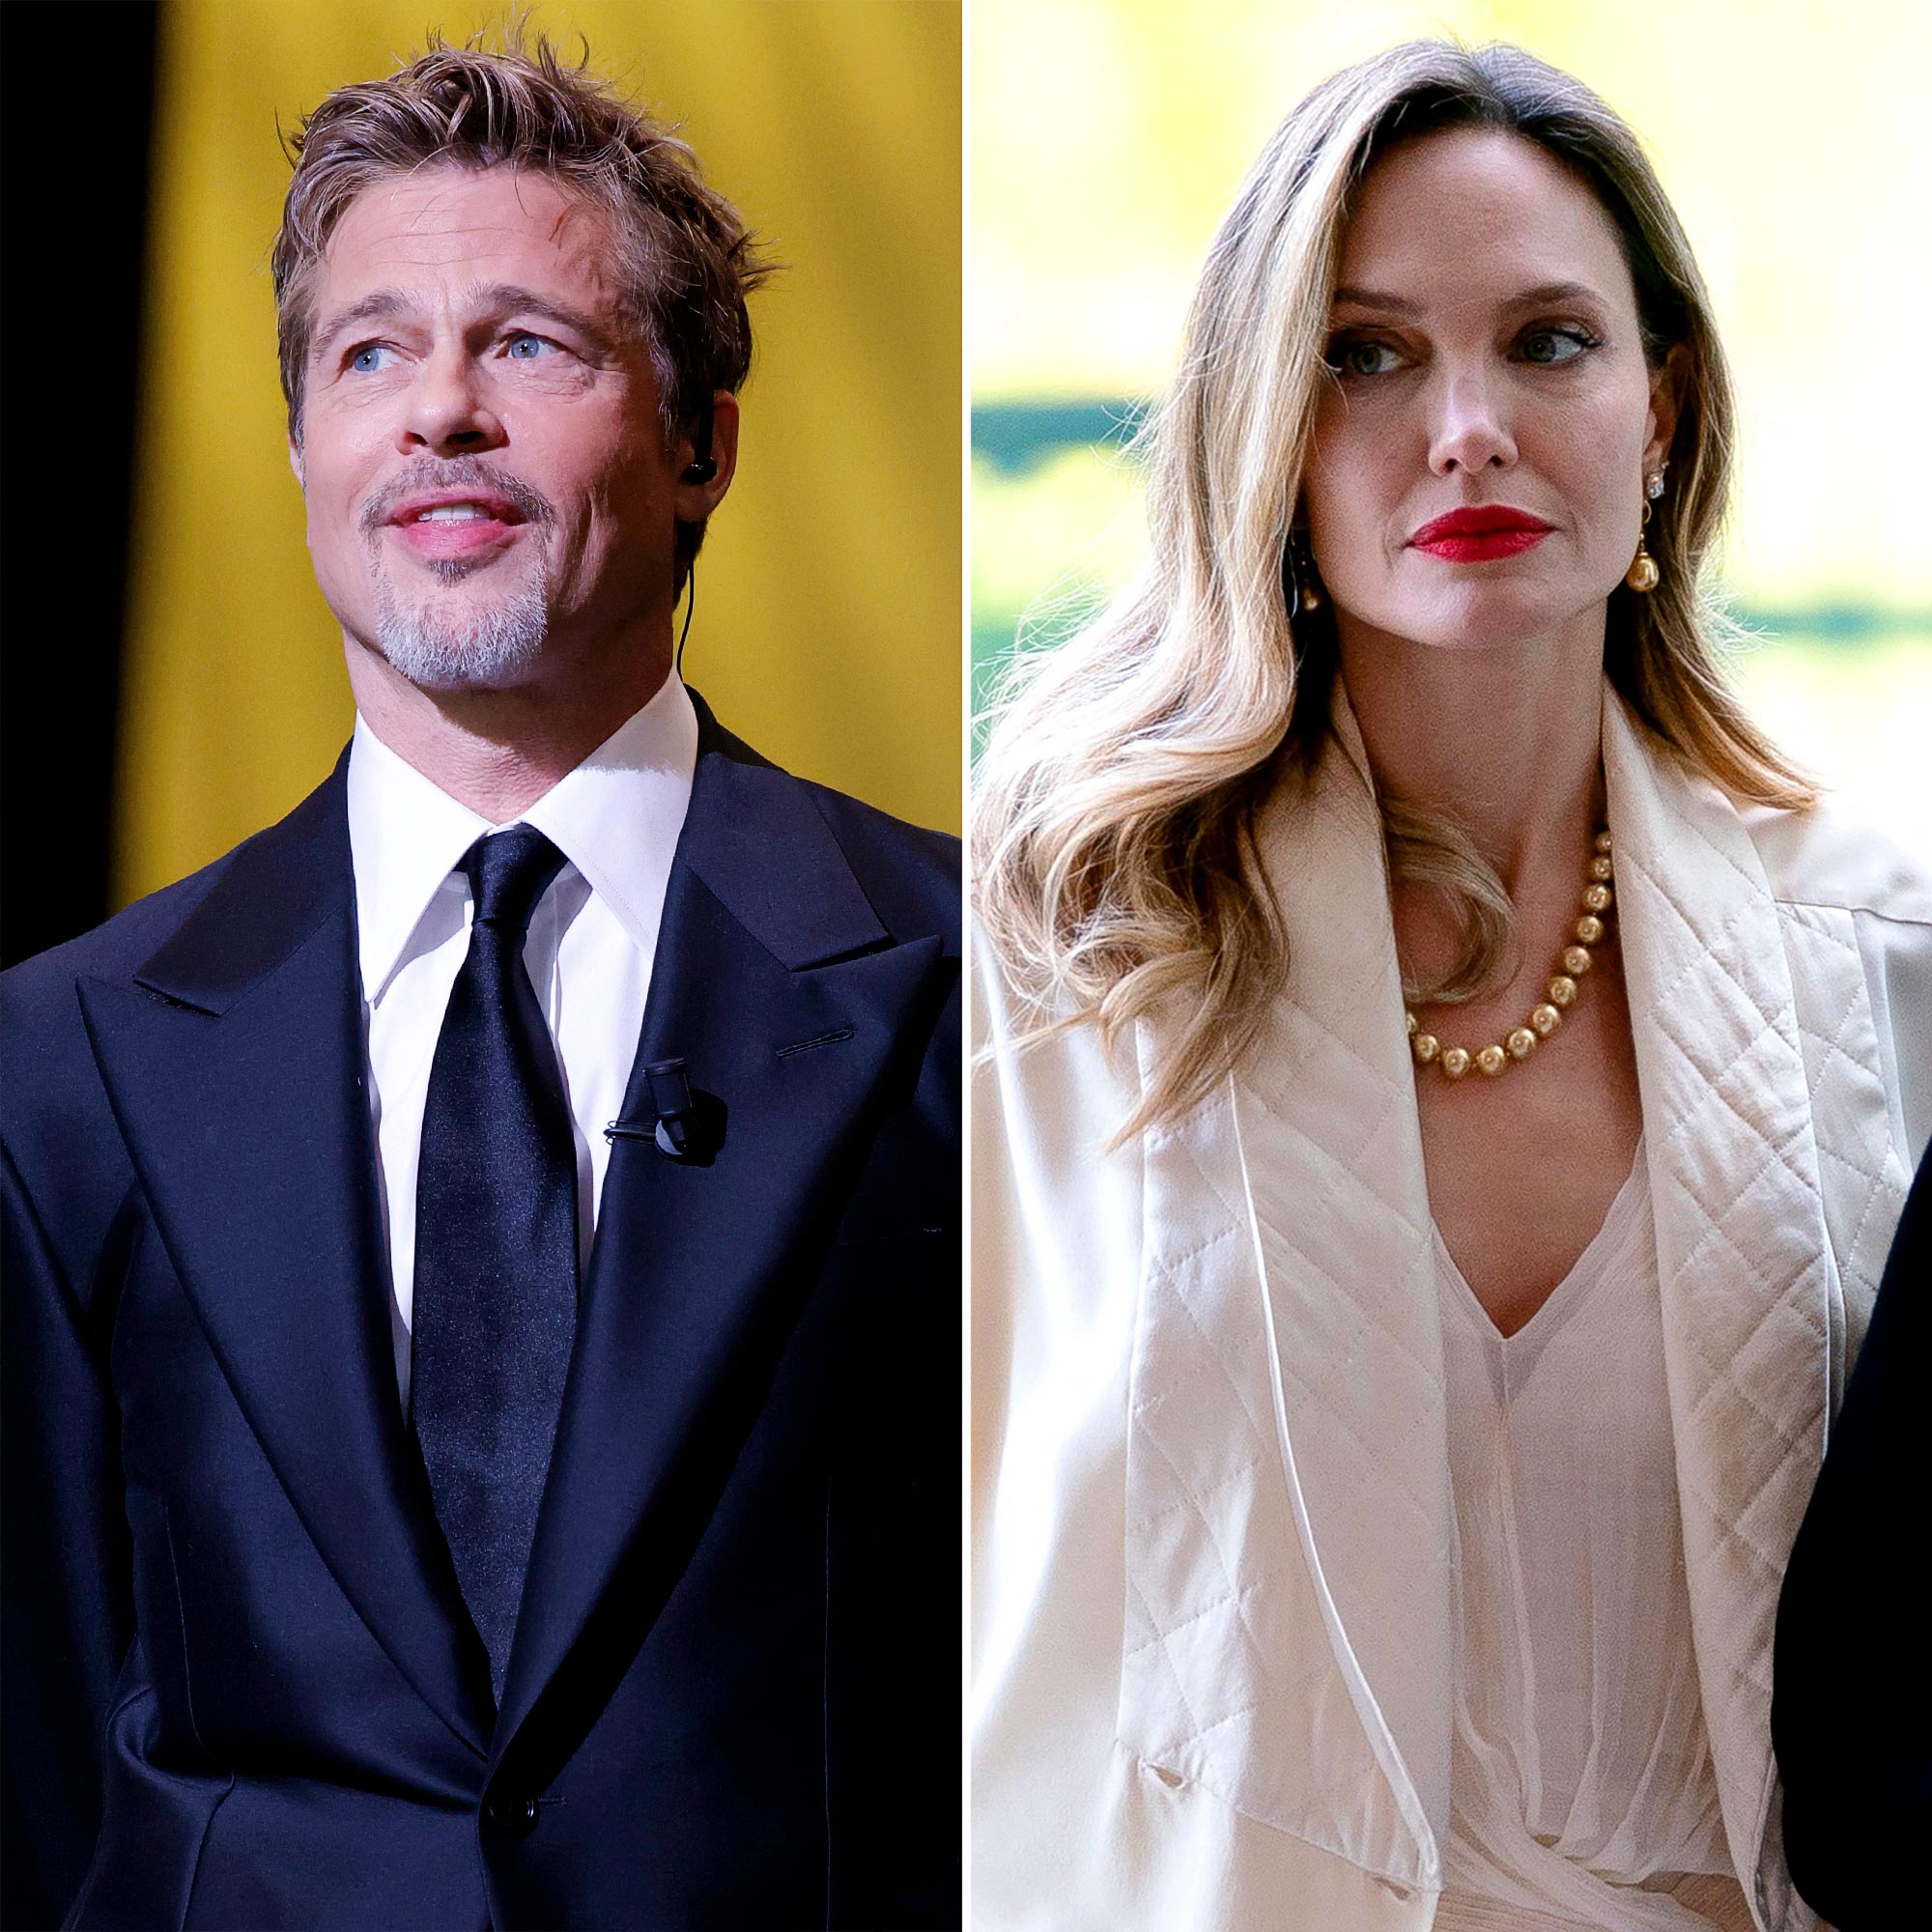 Where Brad Pitt and Angelina Jolie Stand as Divorce Litigation